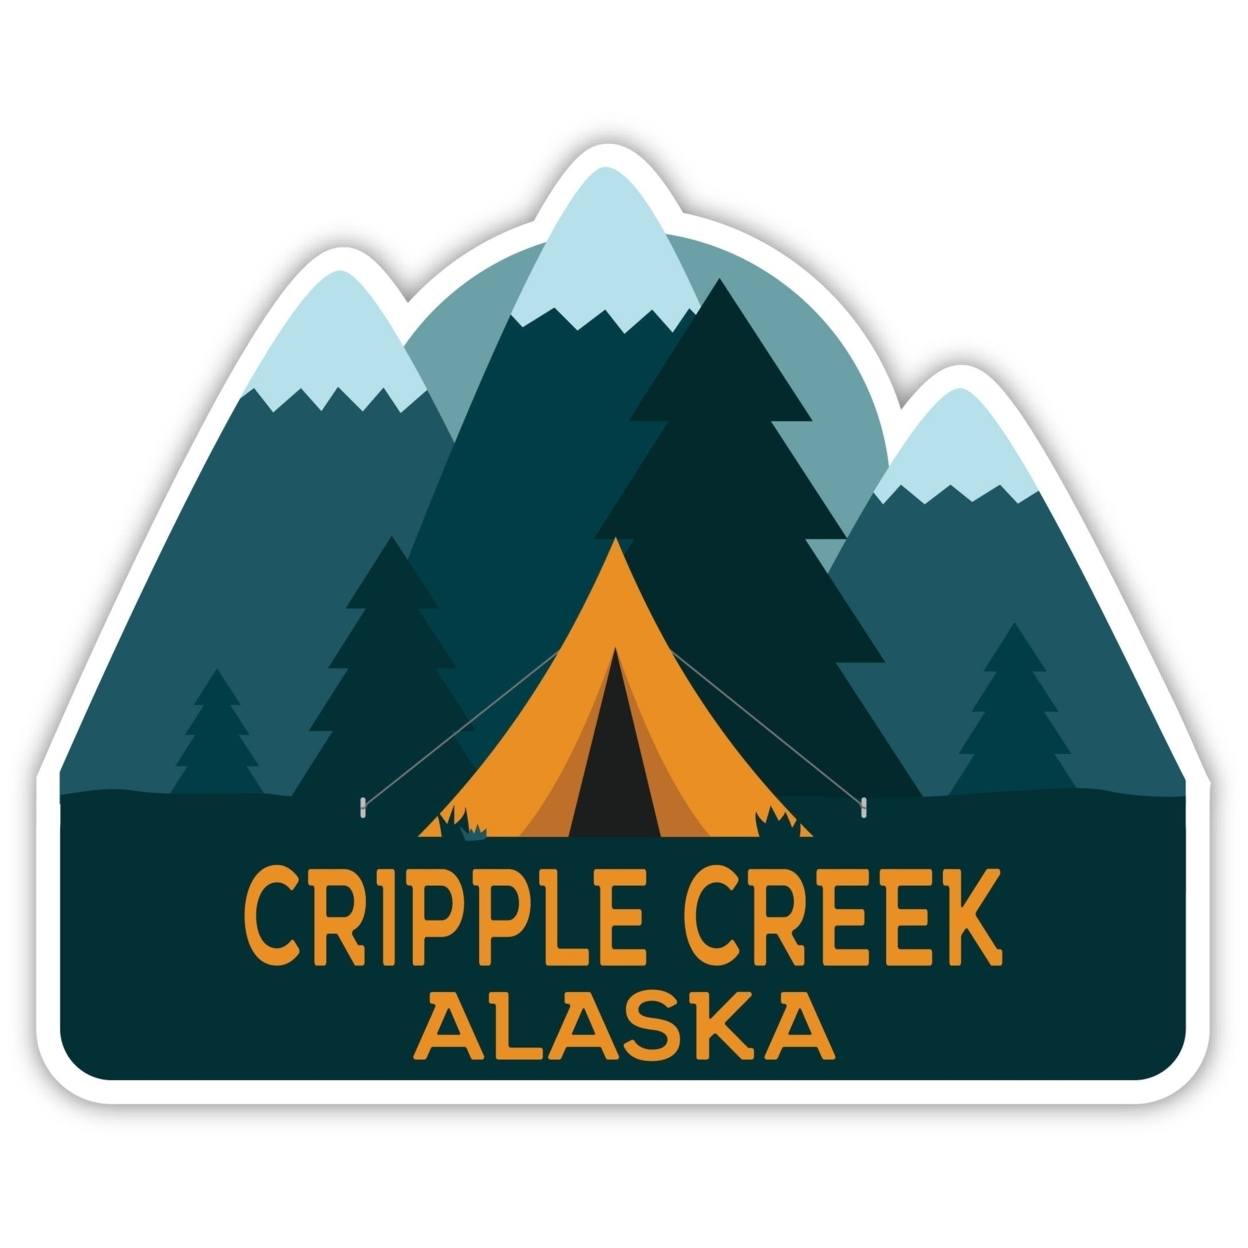 Cripple Creek Alaska Souvenir Decorative Stickers (Choose Theme And Size) - 4-Pack, 4-Inch, Tent